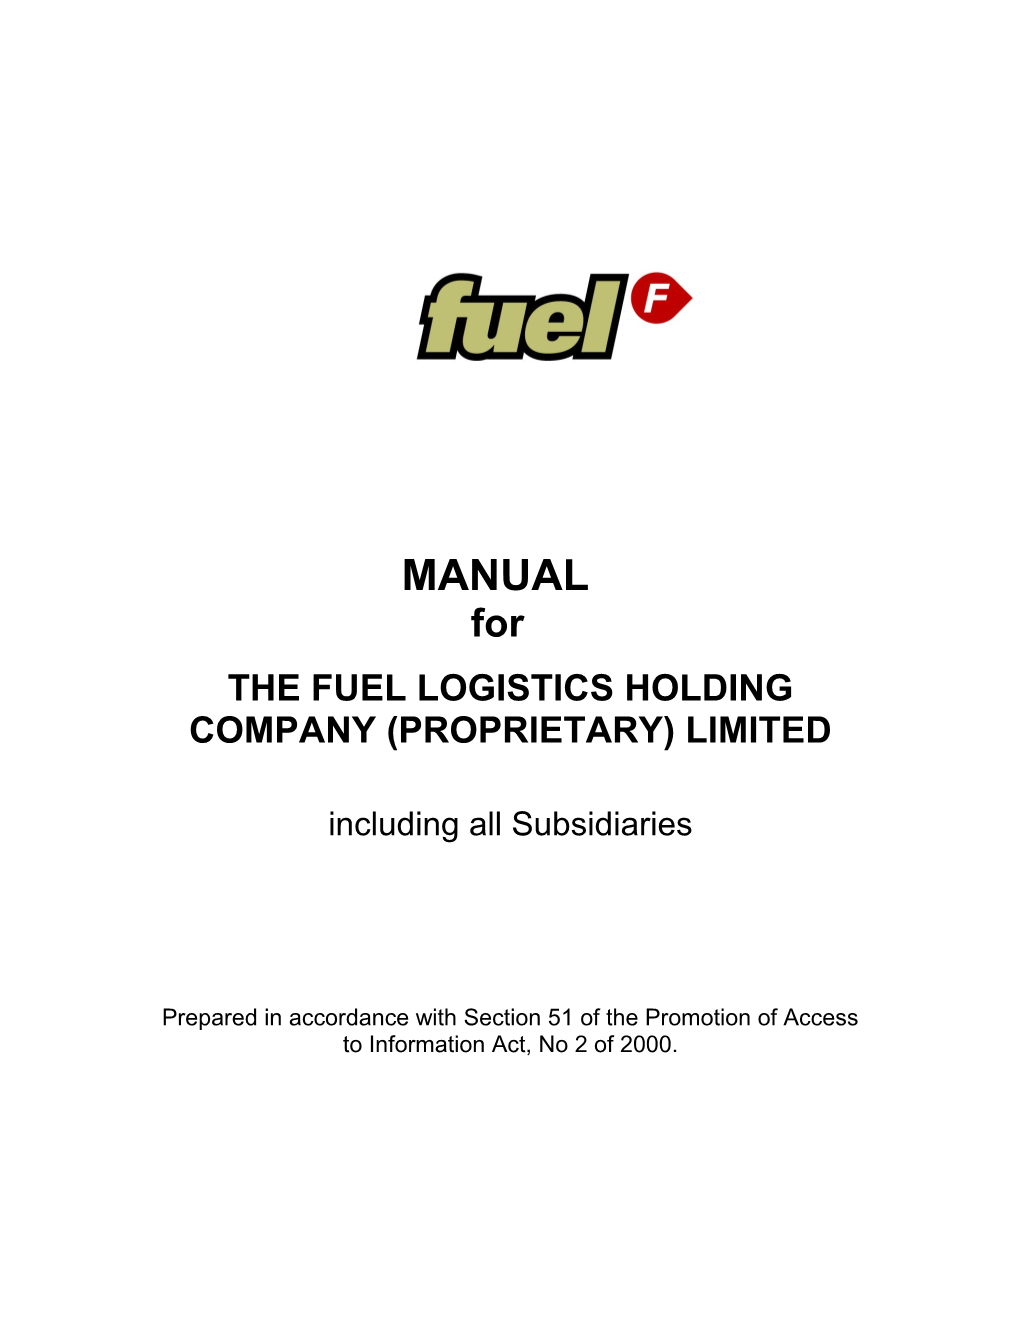 The Fuel Logistics Holding Company (Proprietary) Limited